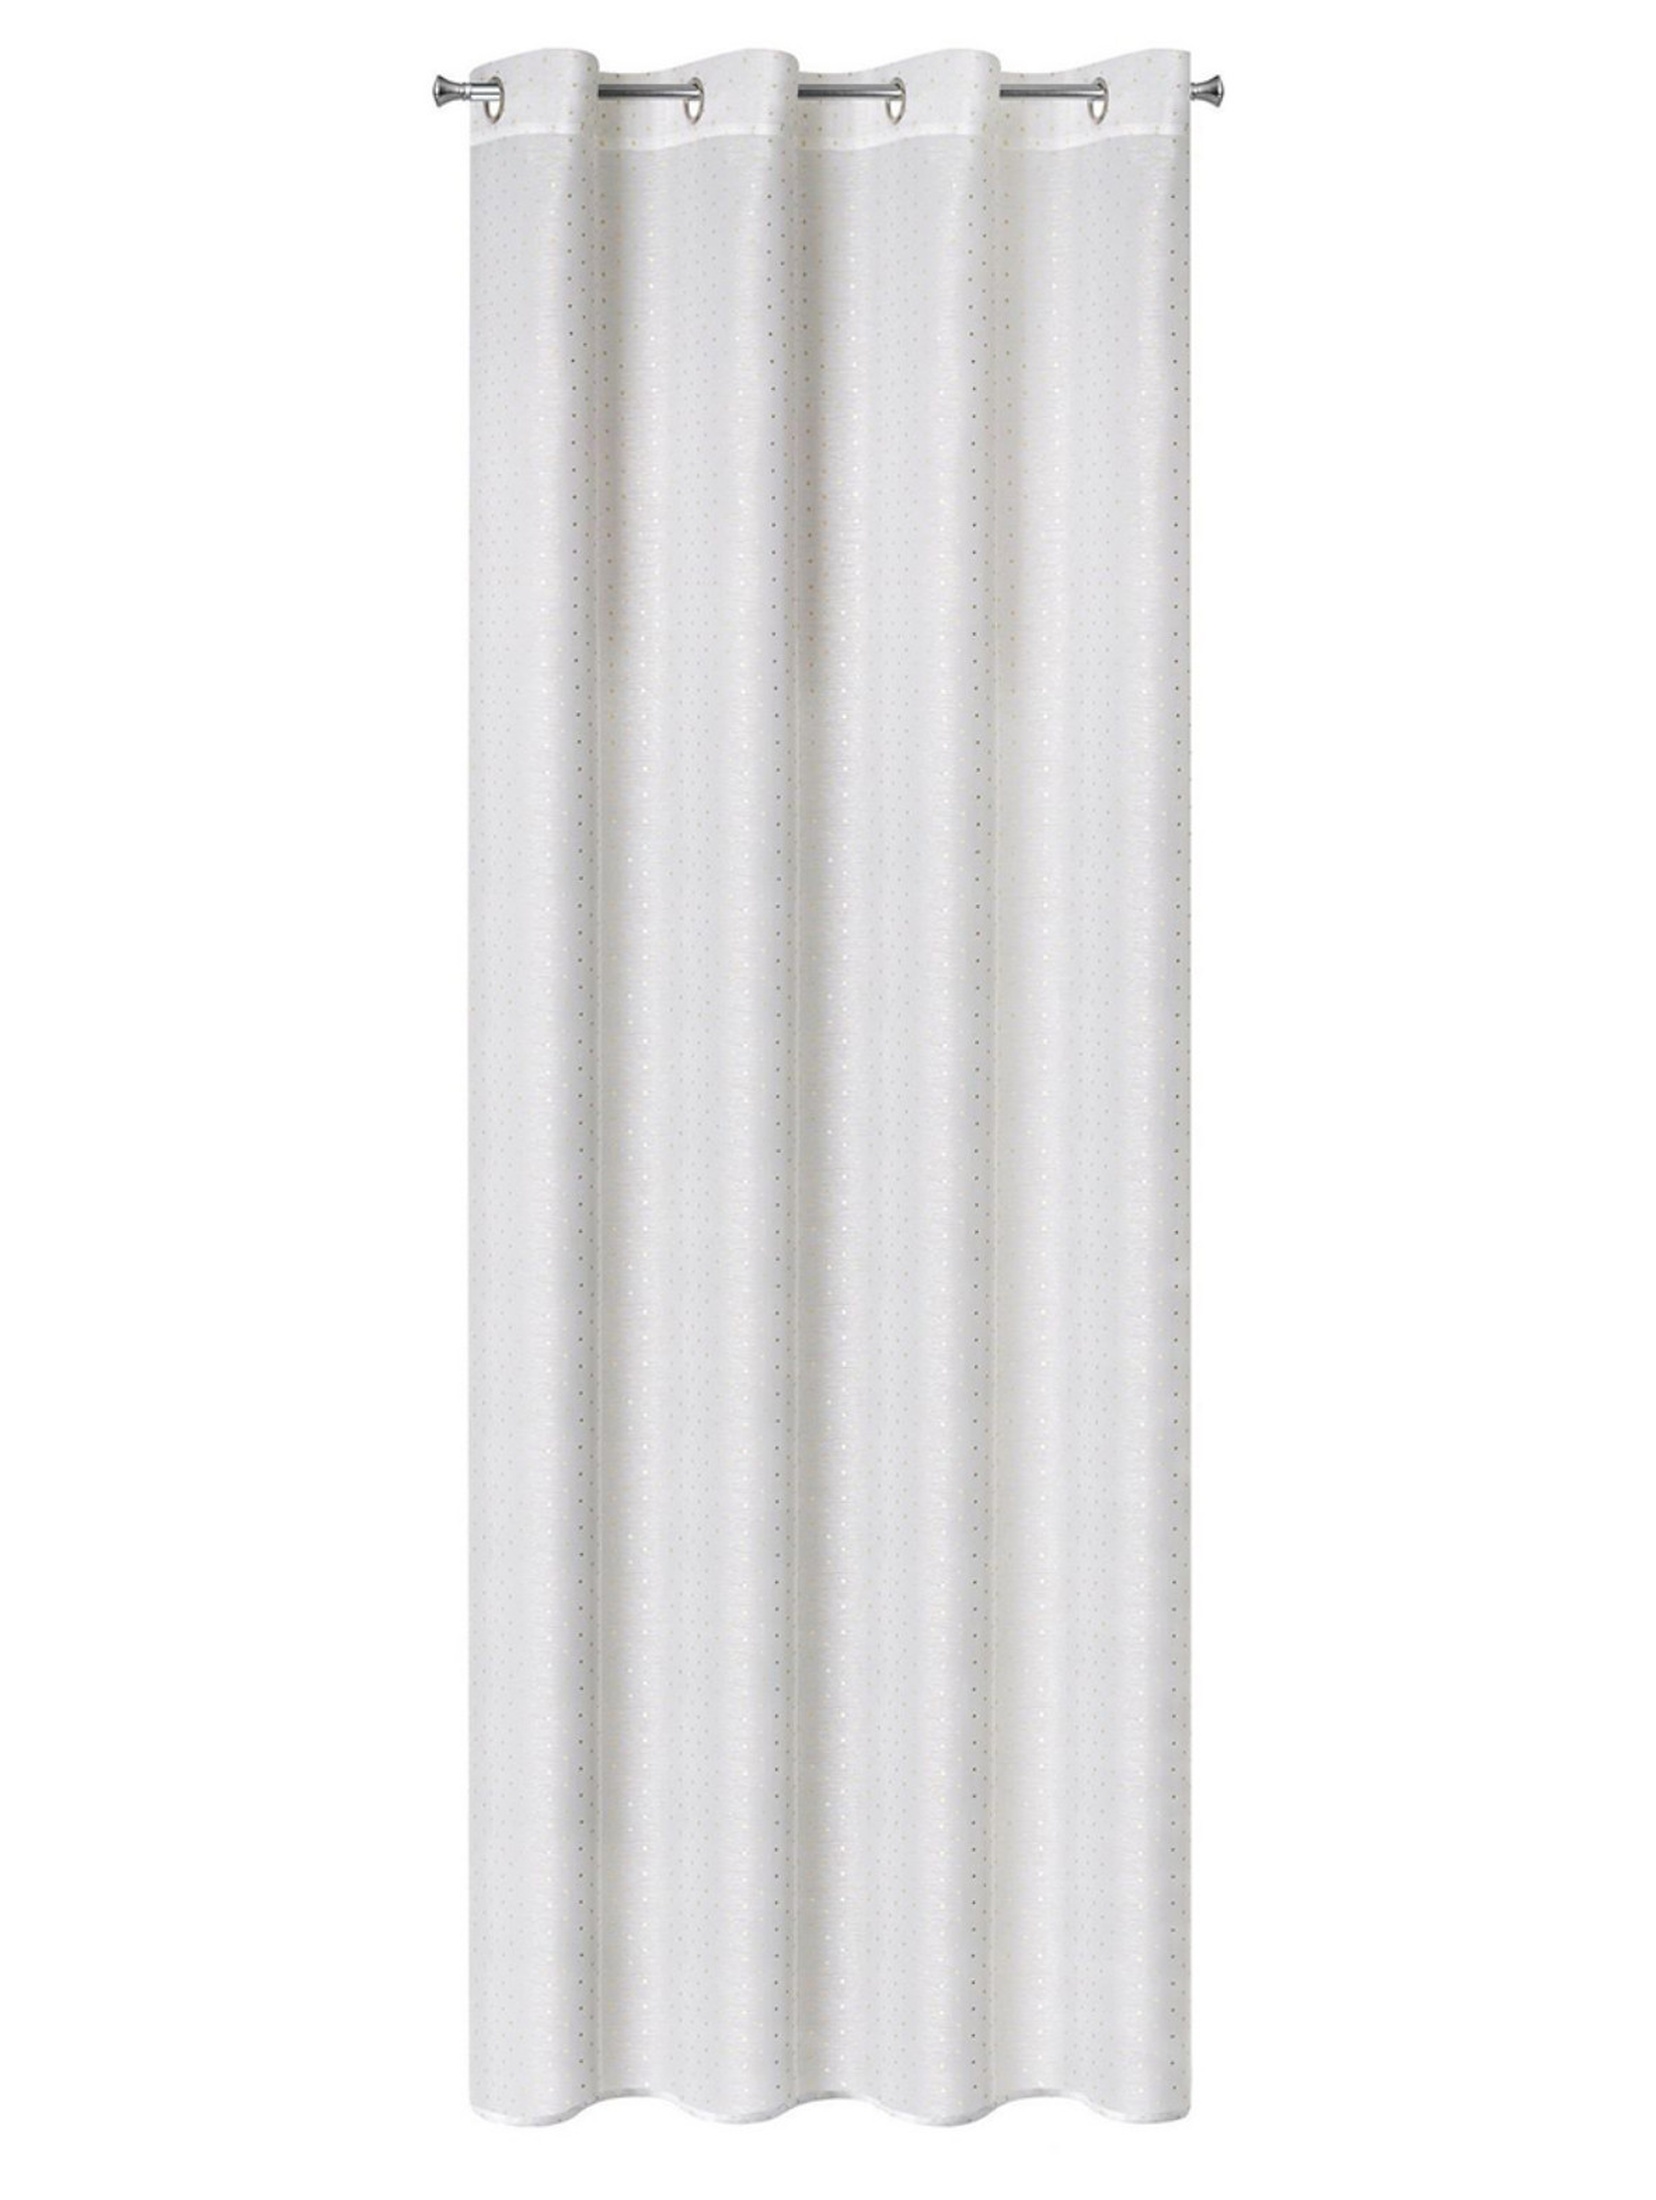 Firana gotowa sibel 140x250 cm biały